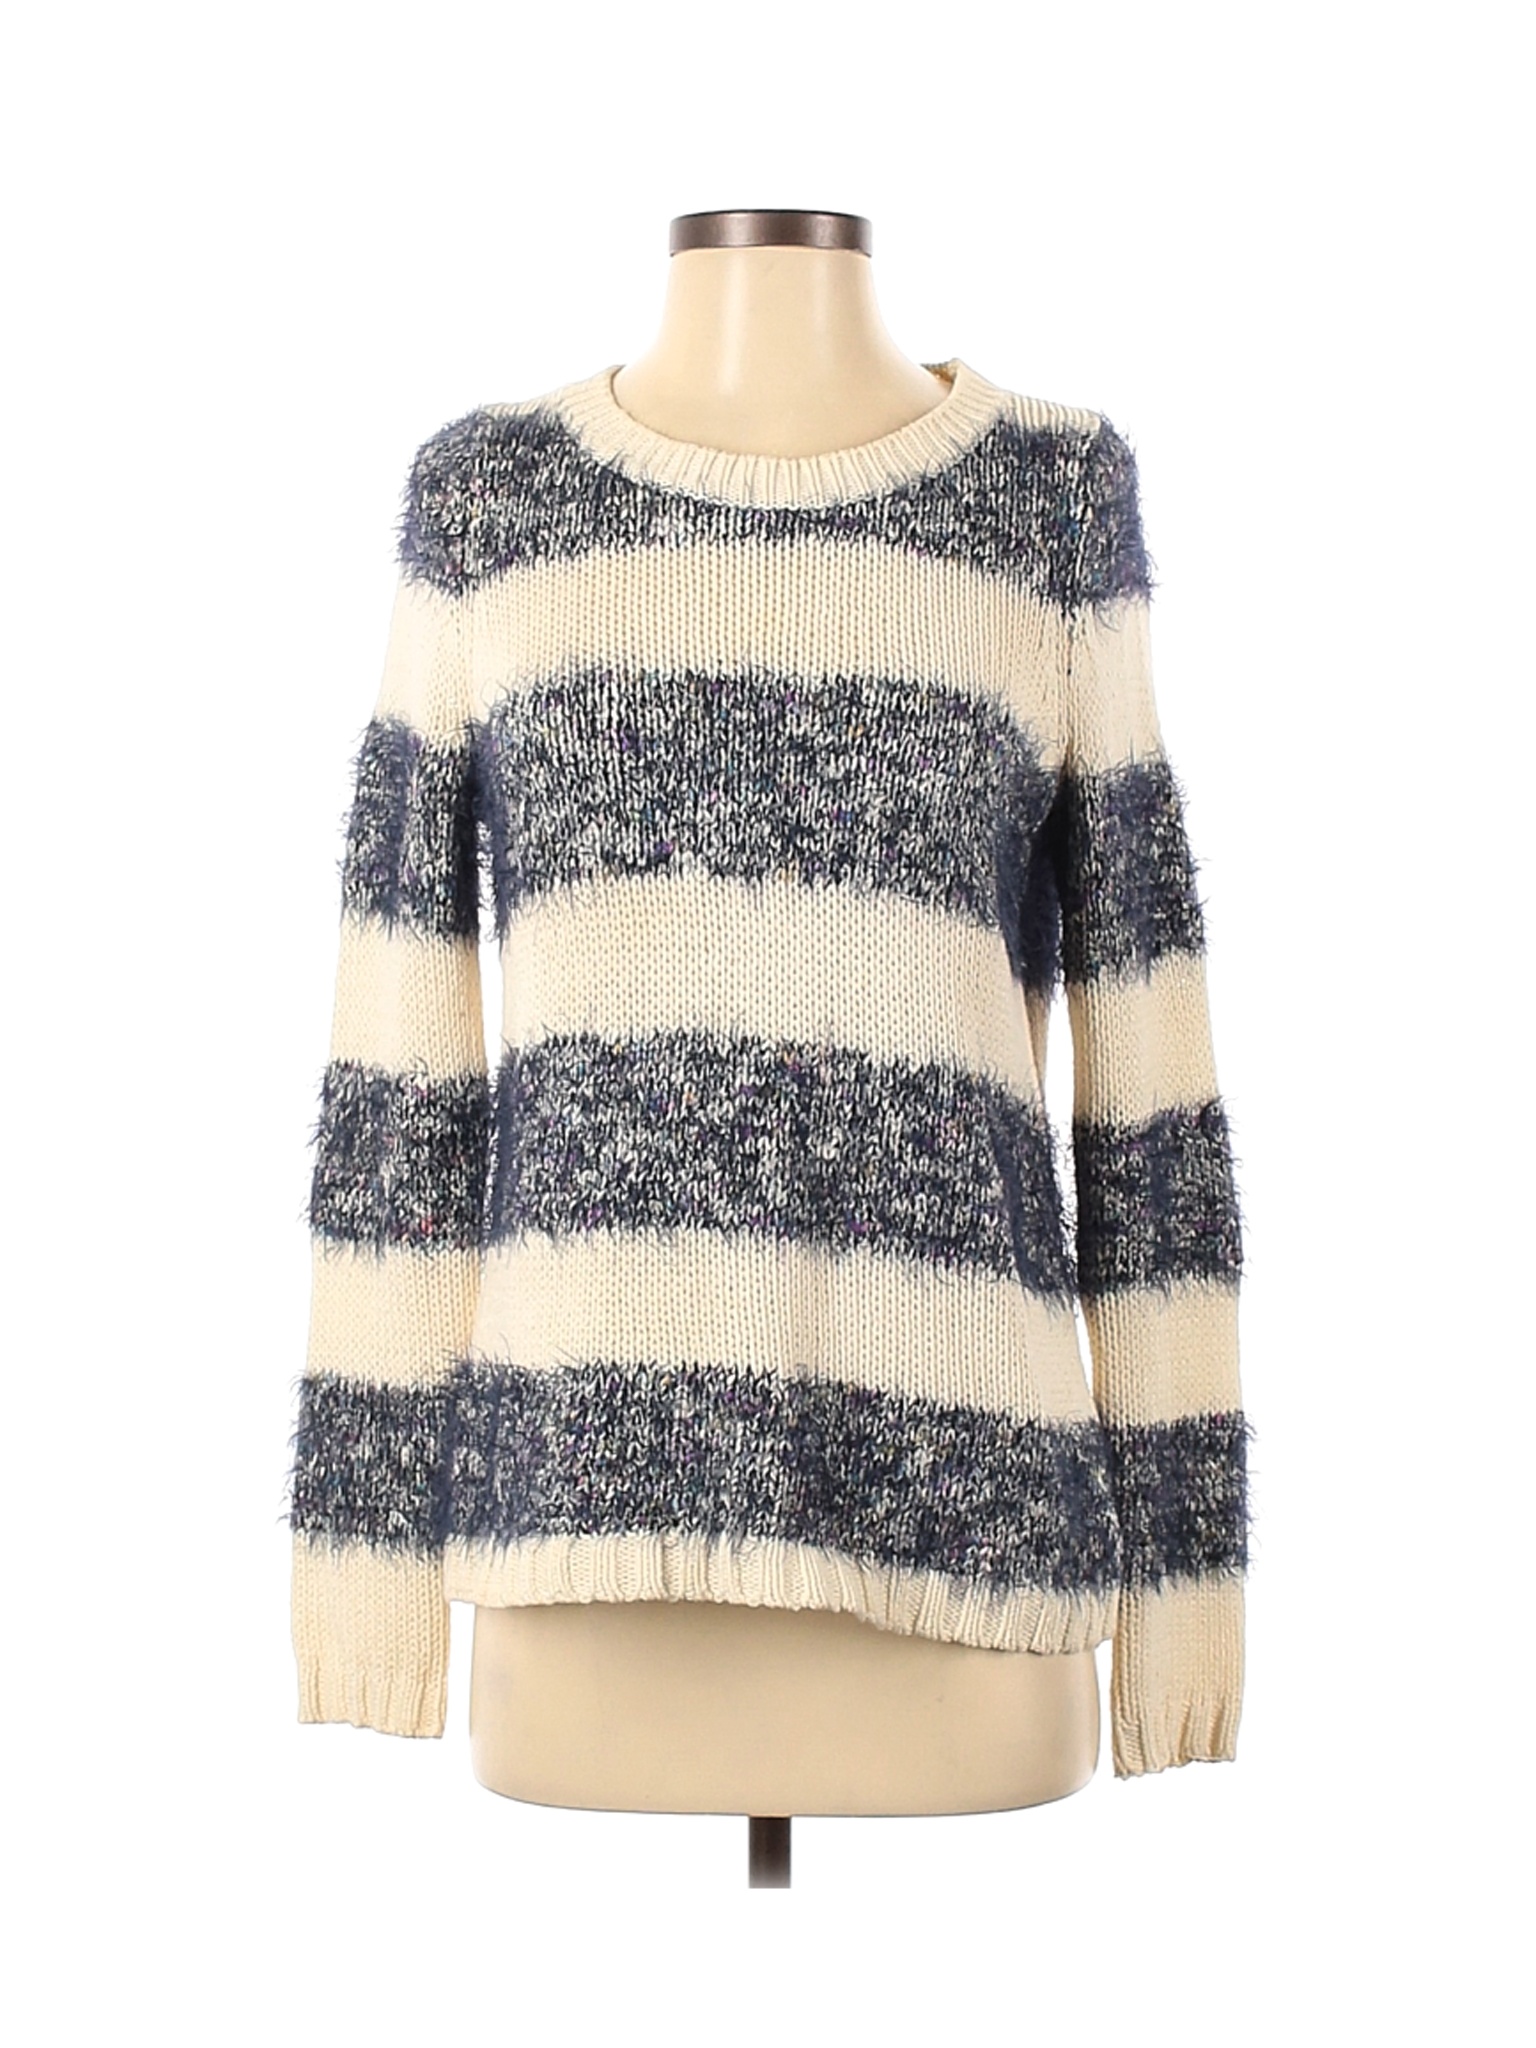 Tabitha Women Brown Pullover Sweater S | eBay